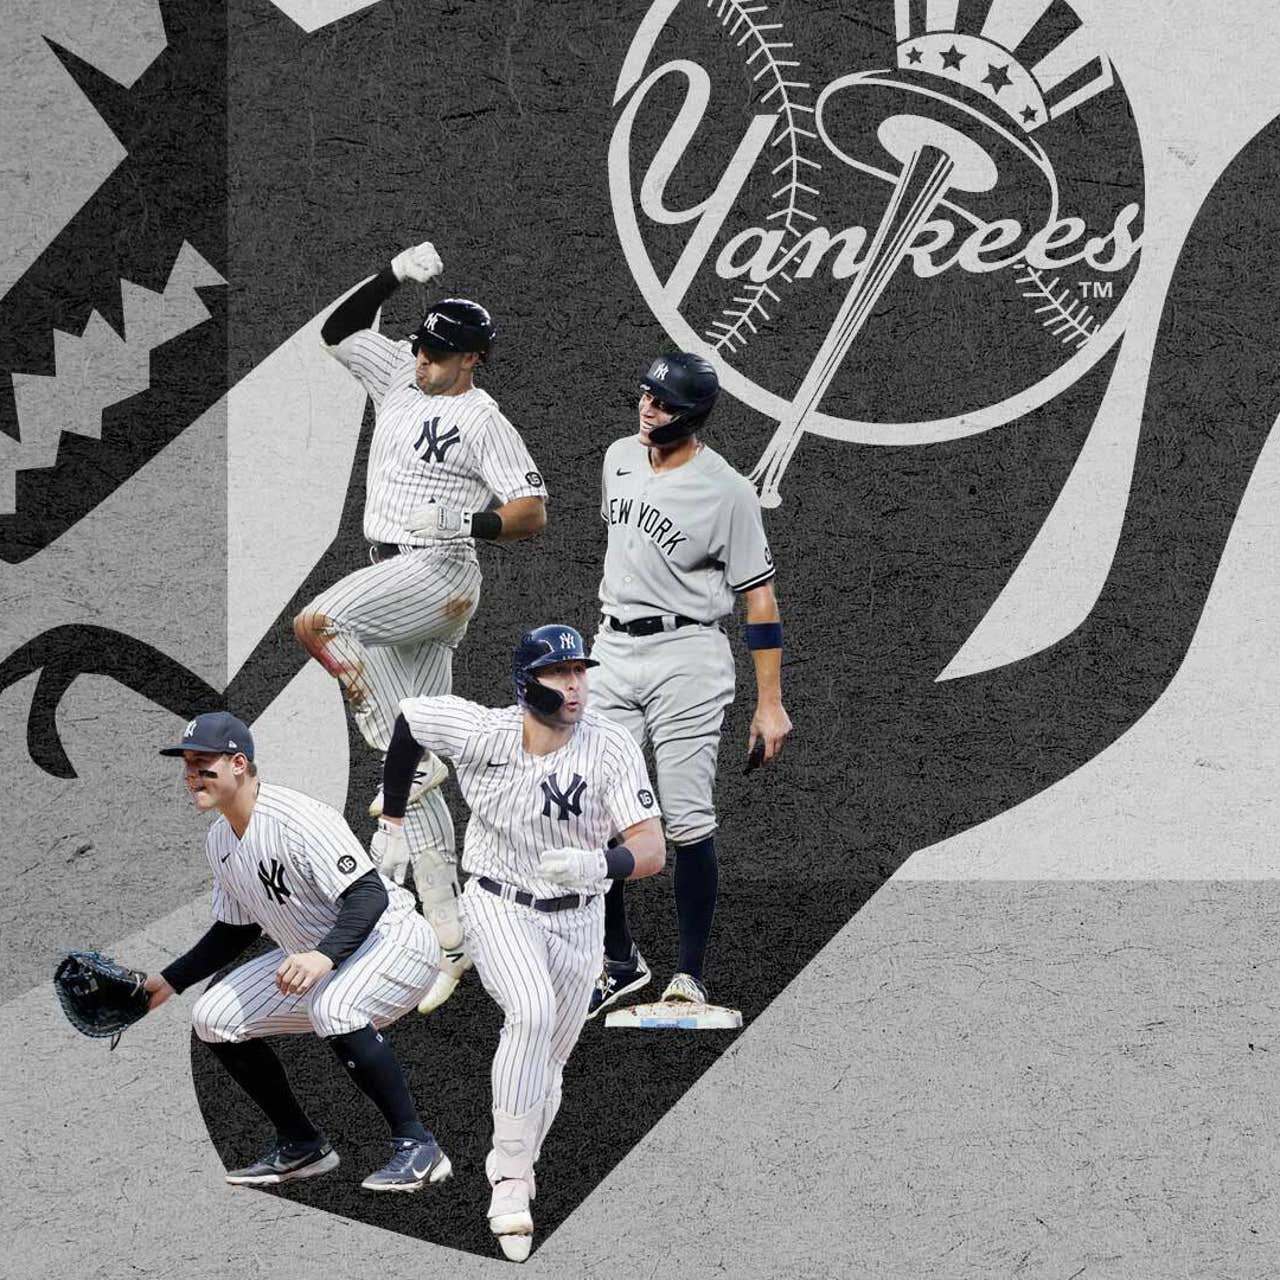 New York Yankees testing whether bigger is always better in baseball